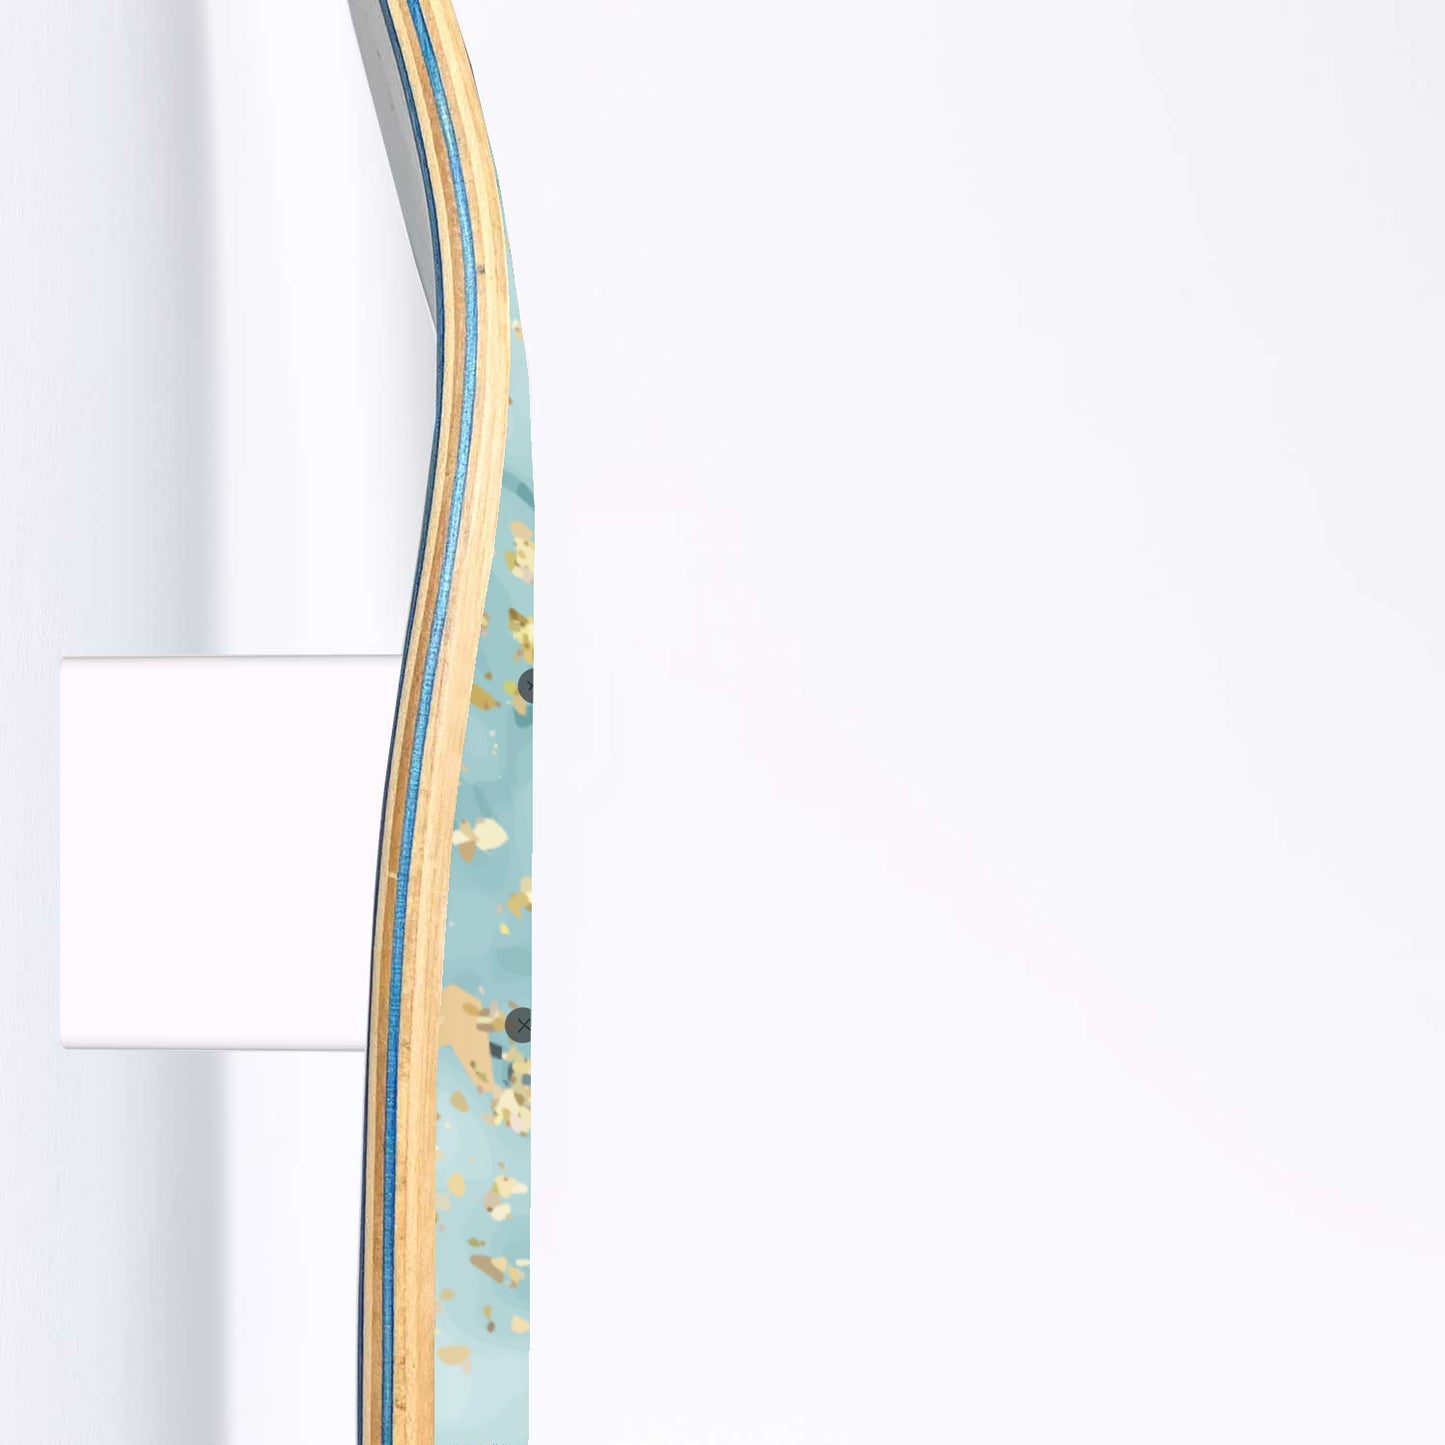 Sea Foam - Liquid Marble Wall Decor - Blue-Green - 1-piece - Skateboard Deck Wall Art